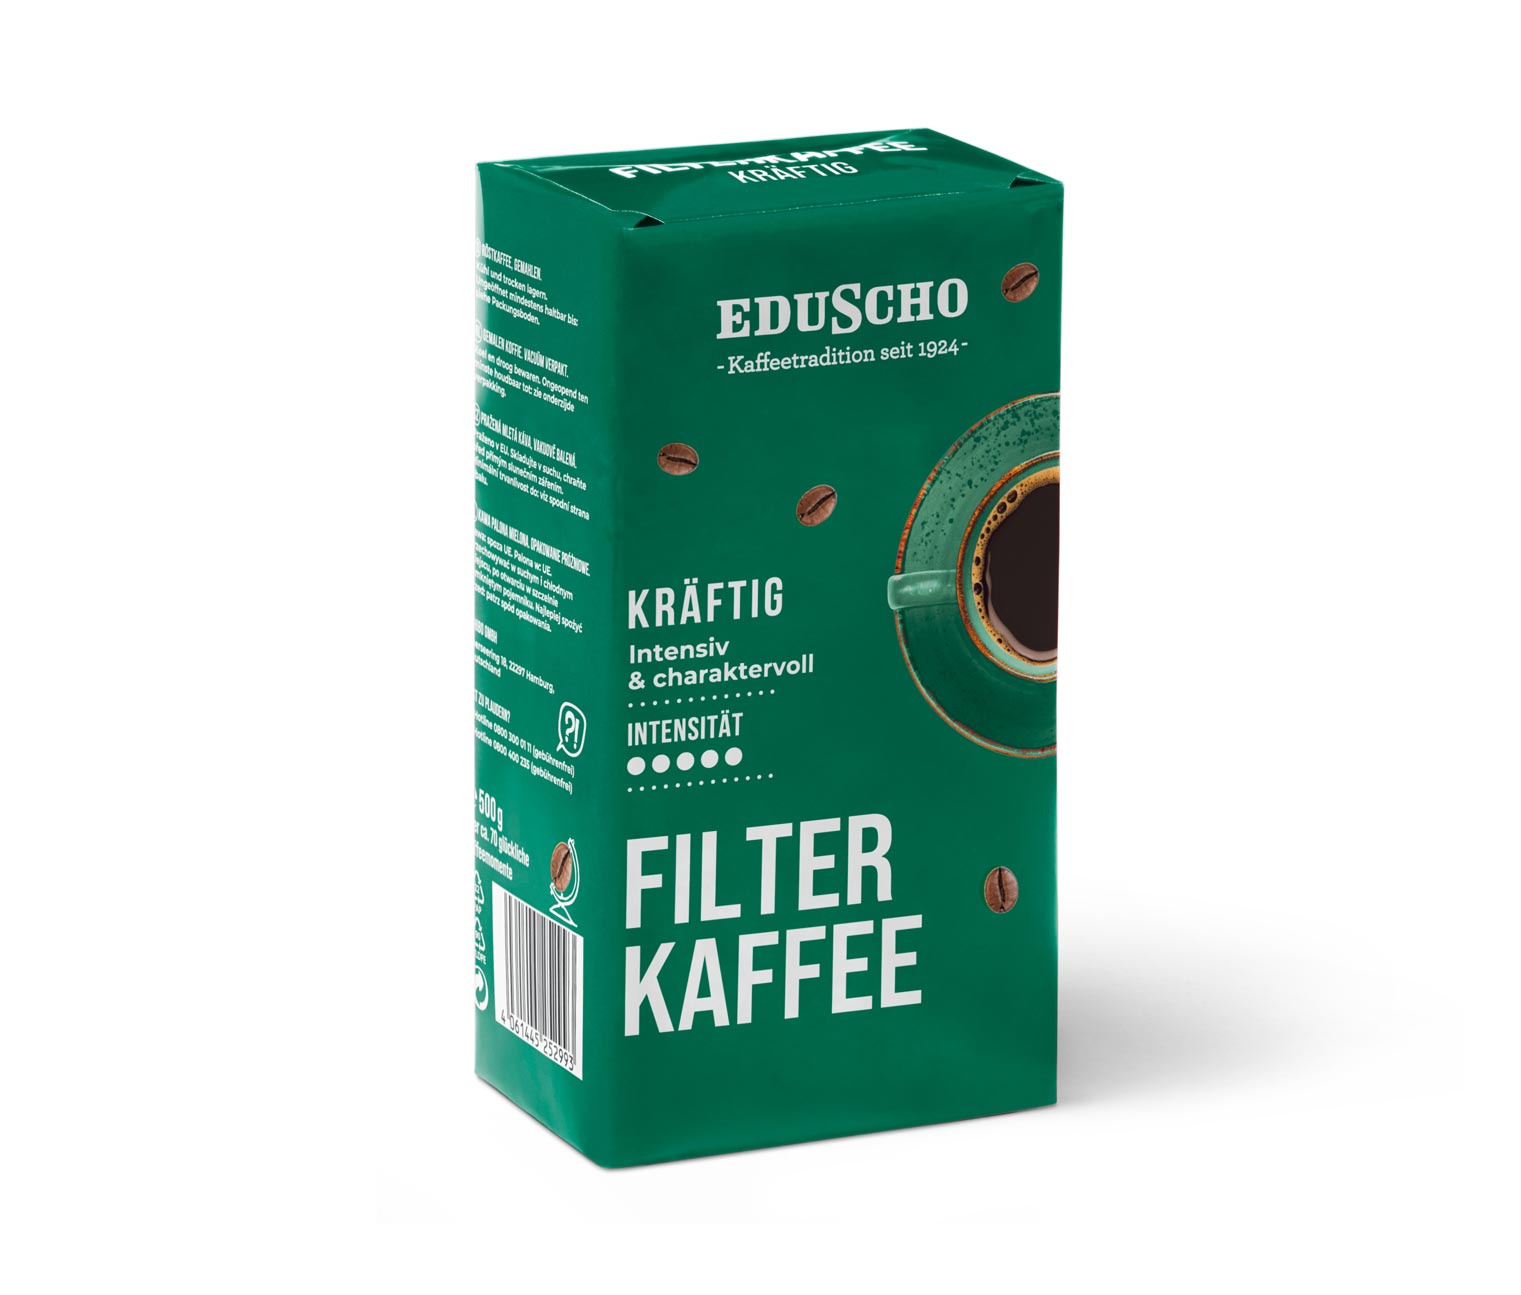 Eduscho Filterkaffee Kr 228 ftig online bestellen bei Tchibo 525299